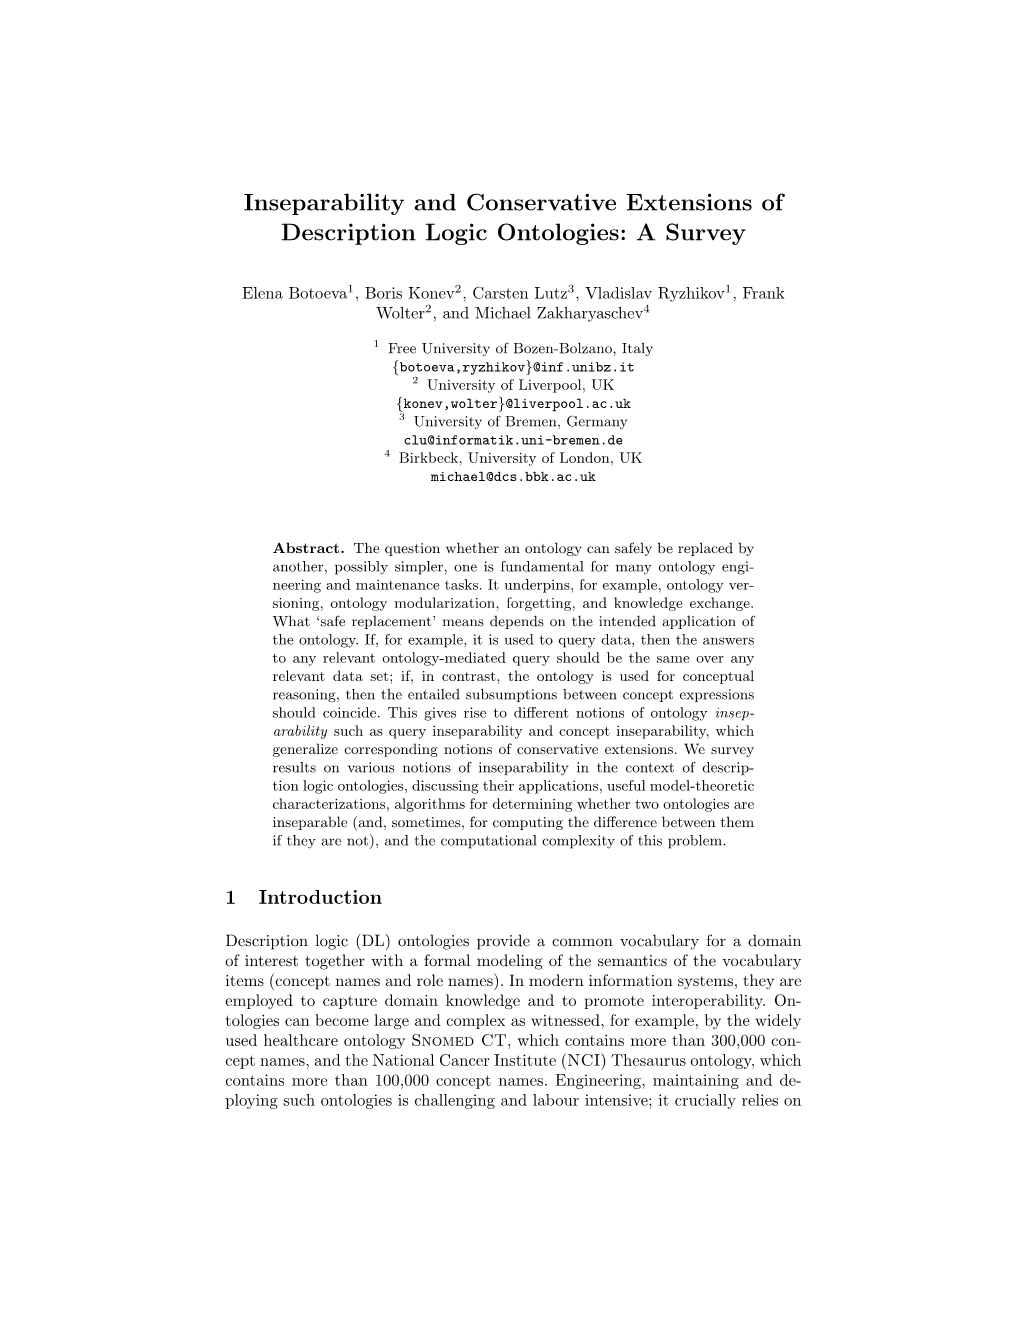 Inseparability and Conservative Extensions of Description Logic Ontologies: a Survey